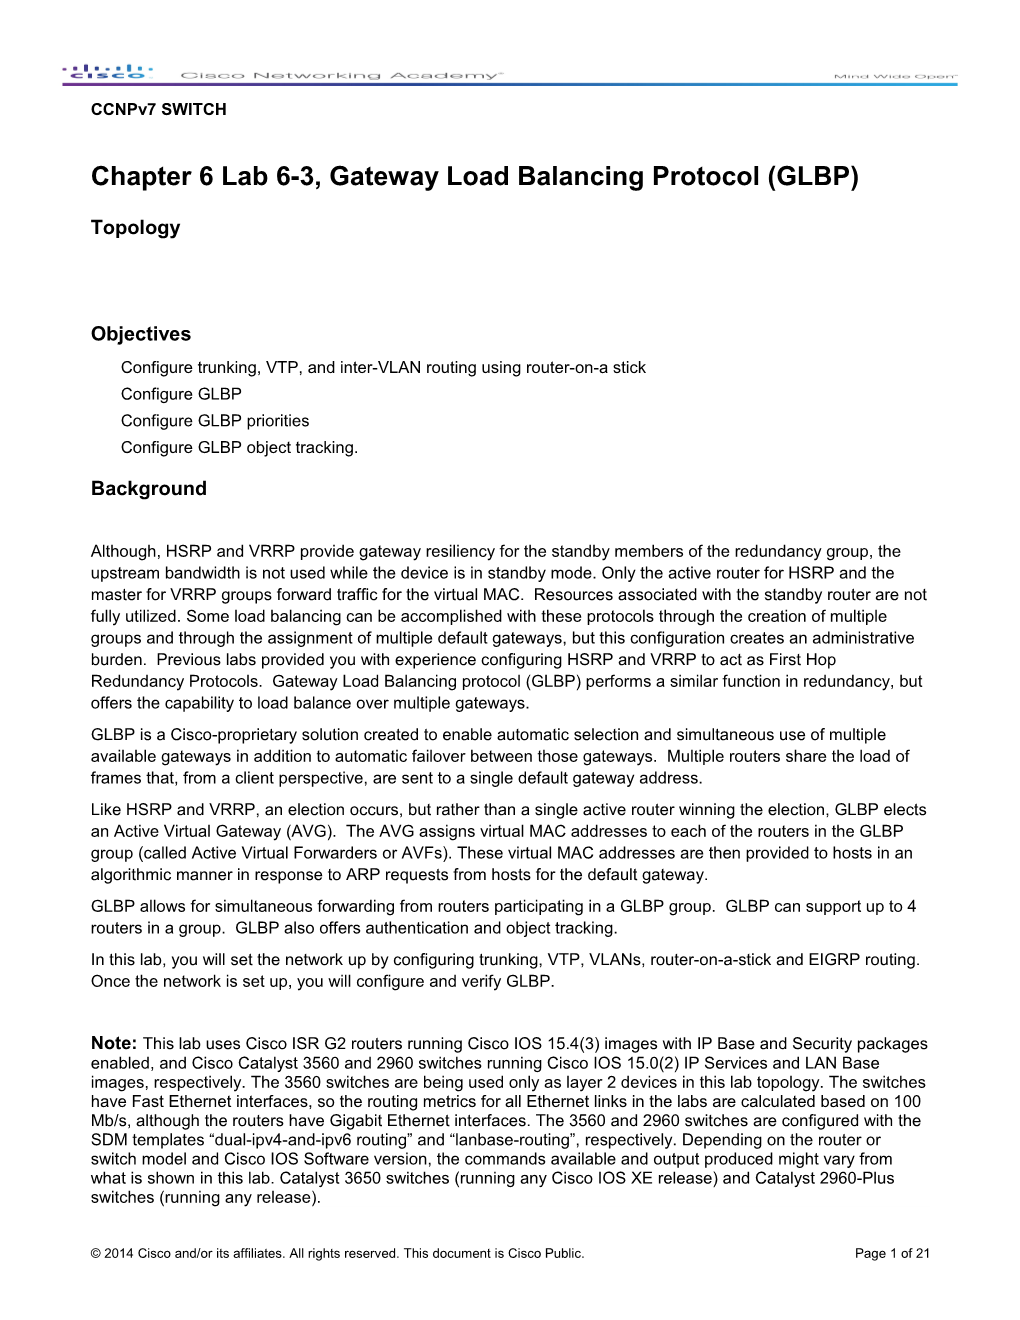 Ccnpv7 SWITCH Chapter 6 Lab 6-3, Configure GLBP